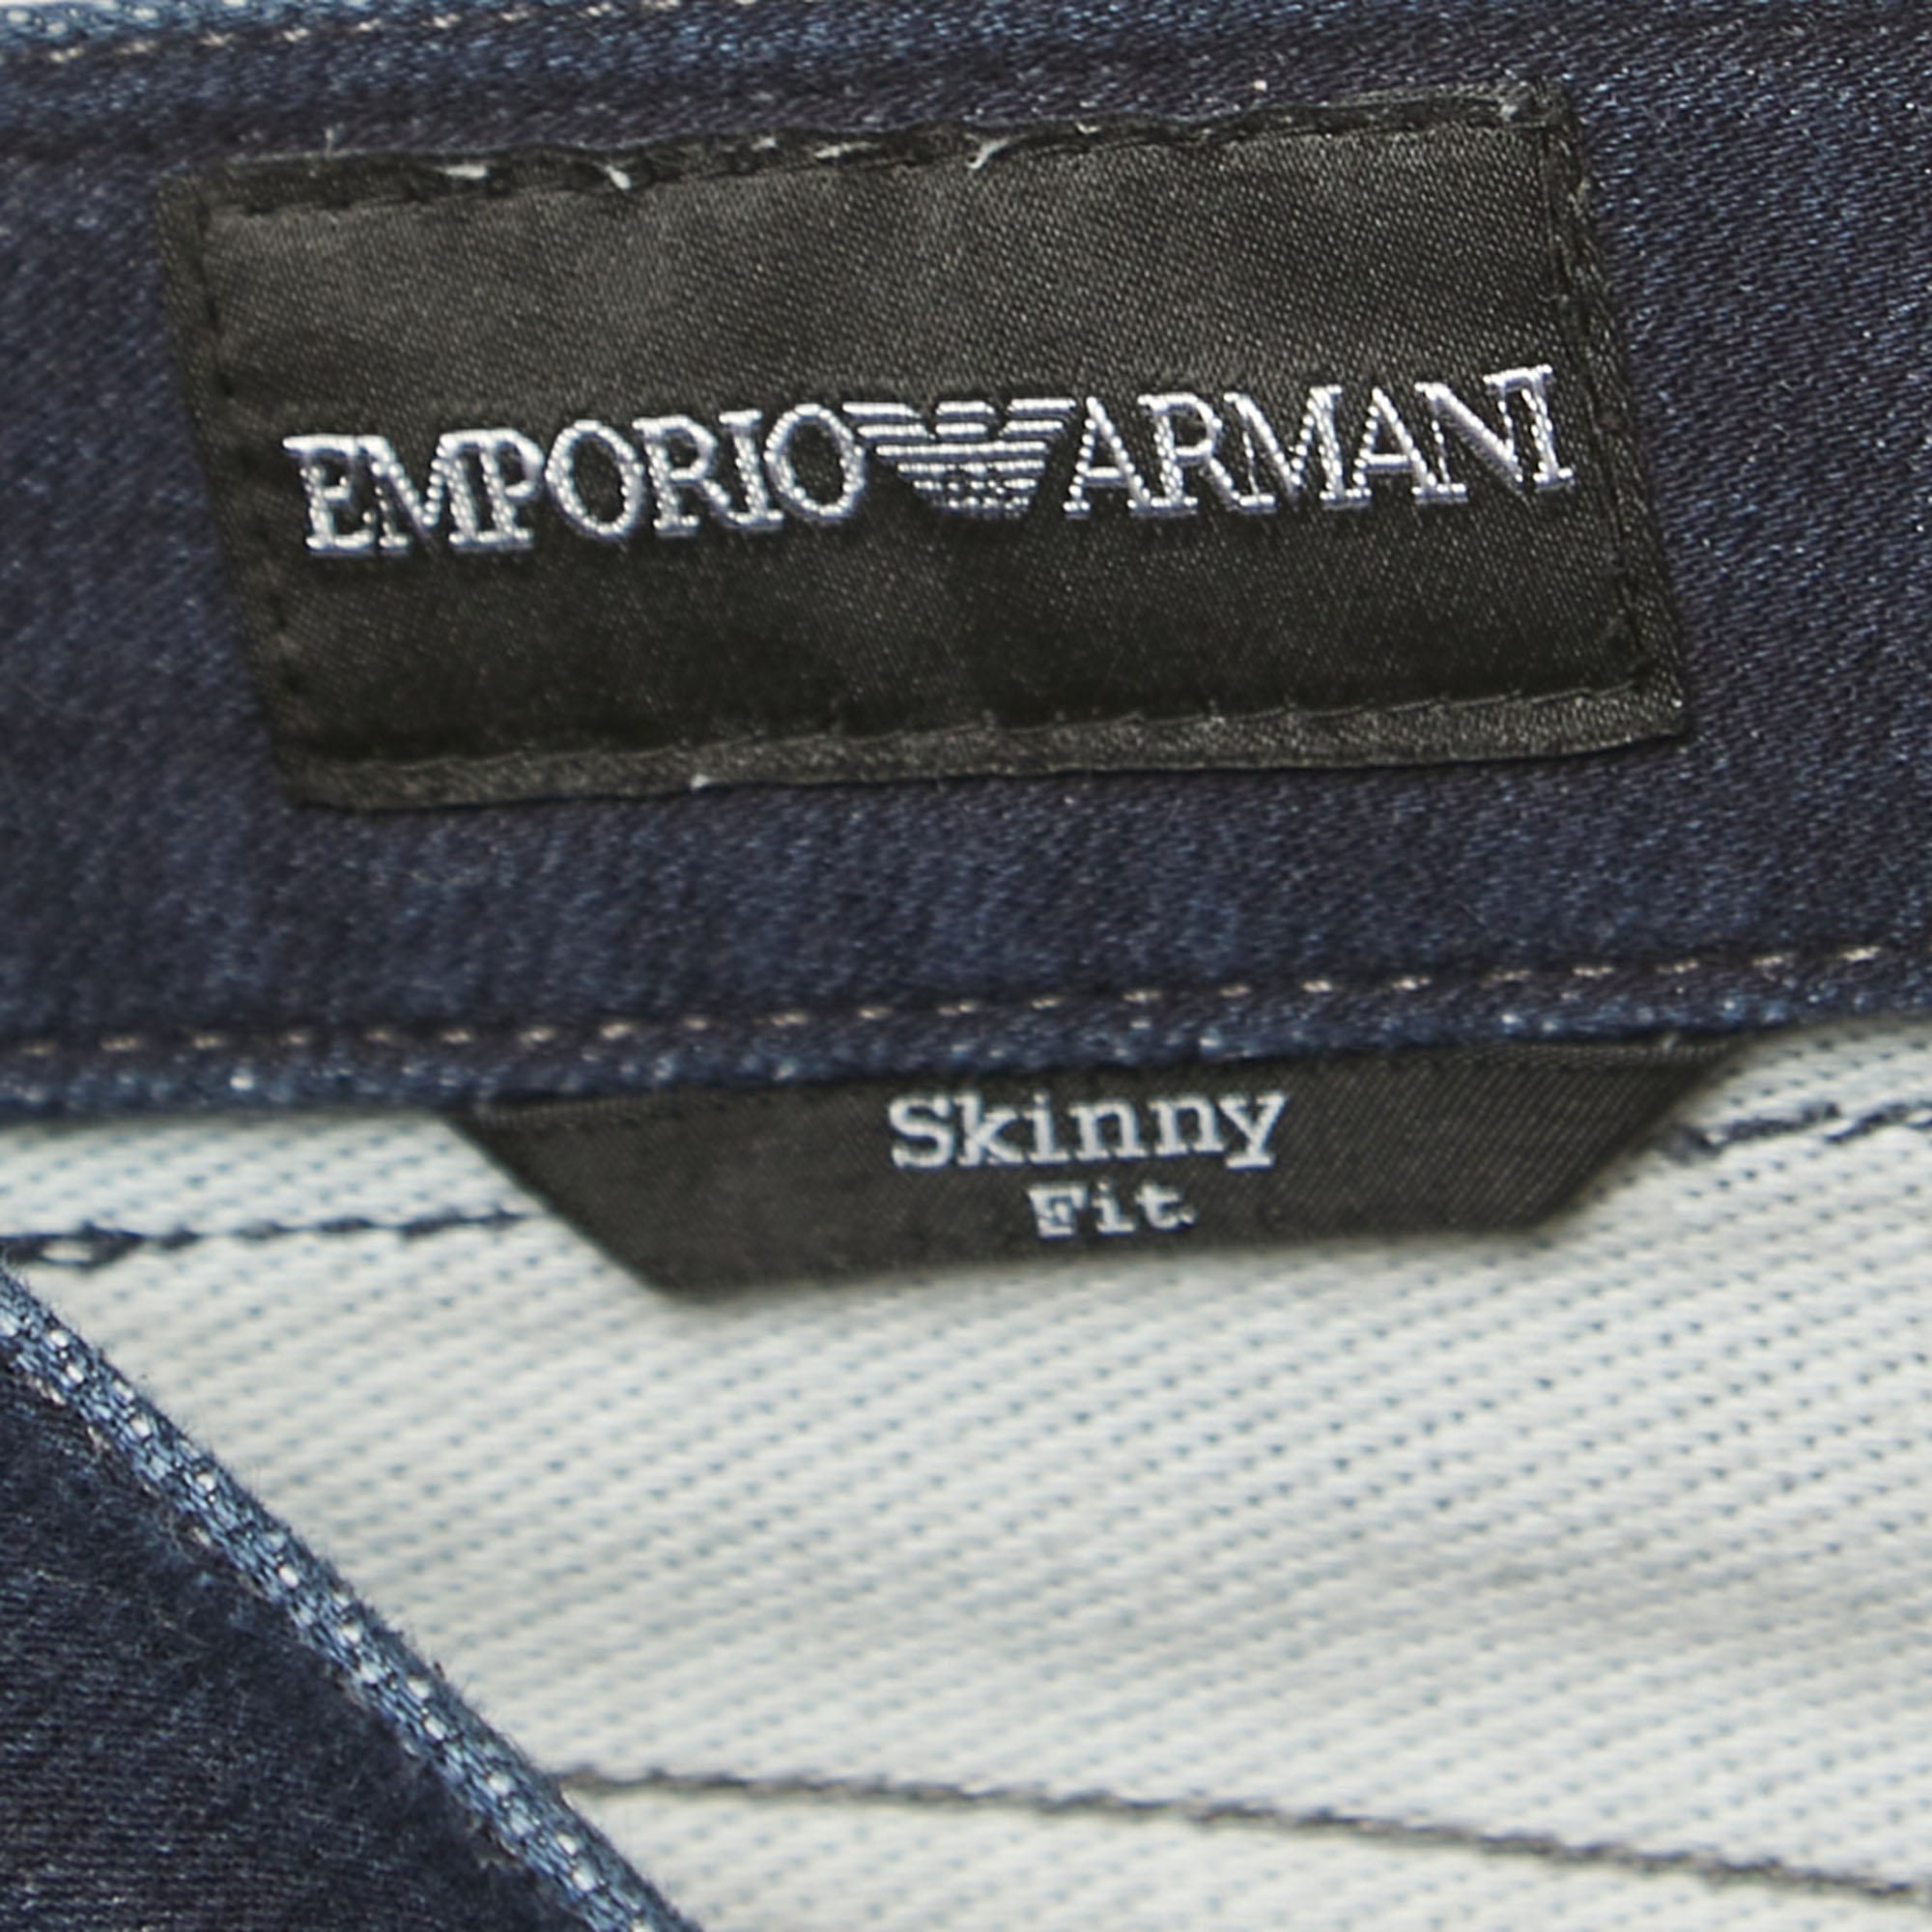 Emporio Armani Navy Blue Denim Buttoned Skinny Fit Jeans S Waist 30